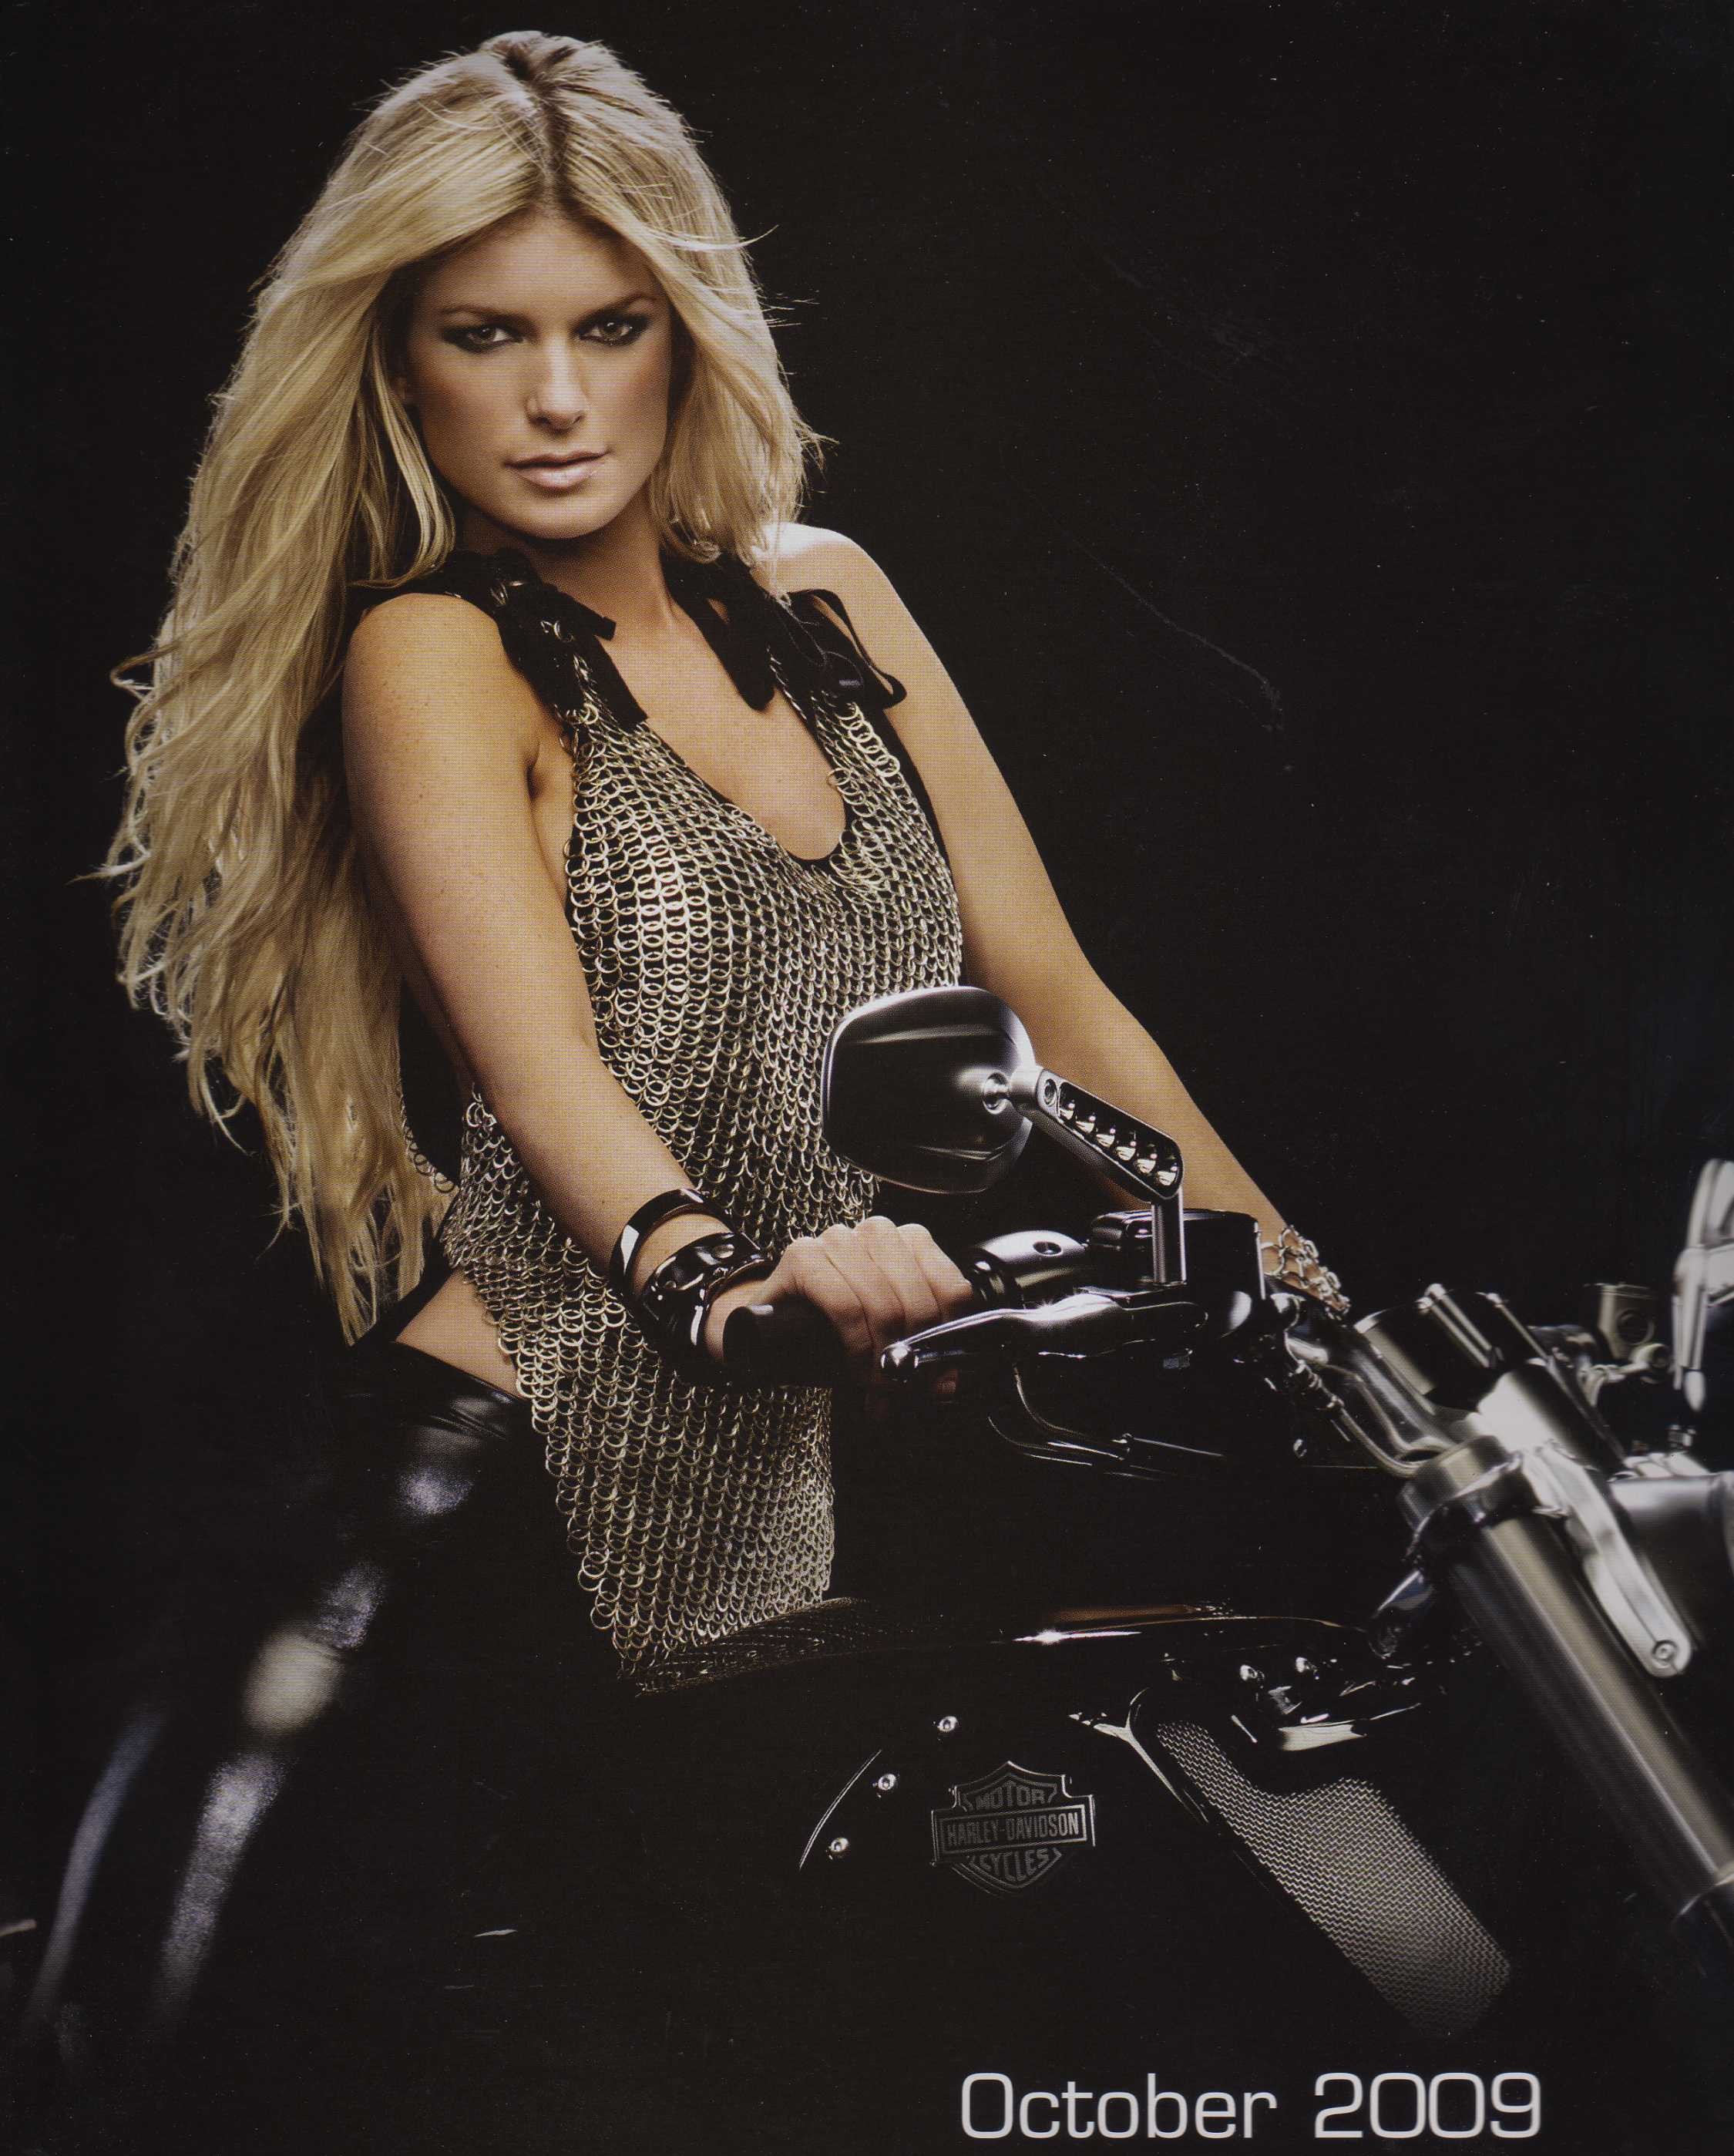 Marisa_Miller_--_Calendar_Harley_Davidson_011.jpg